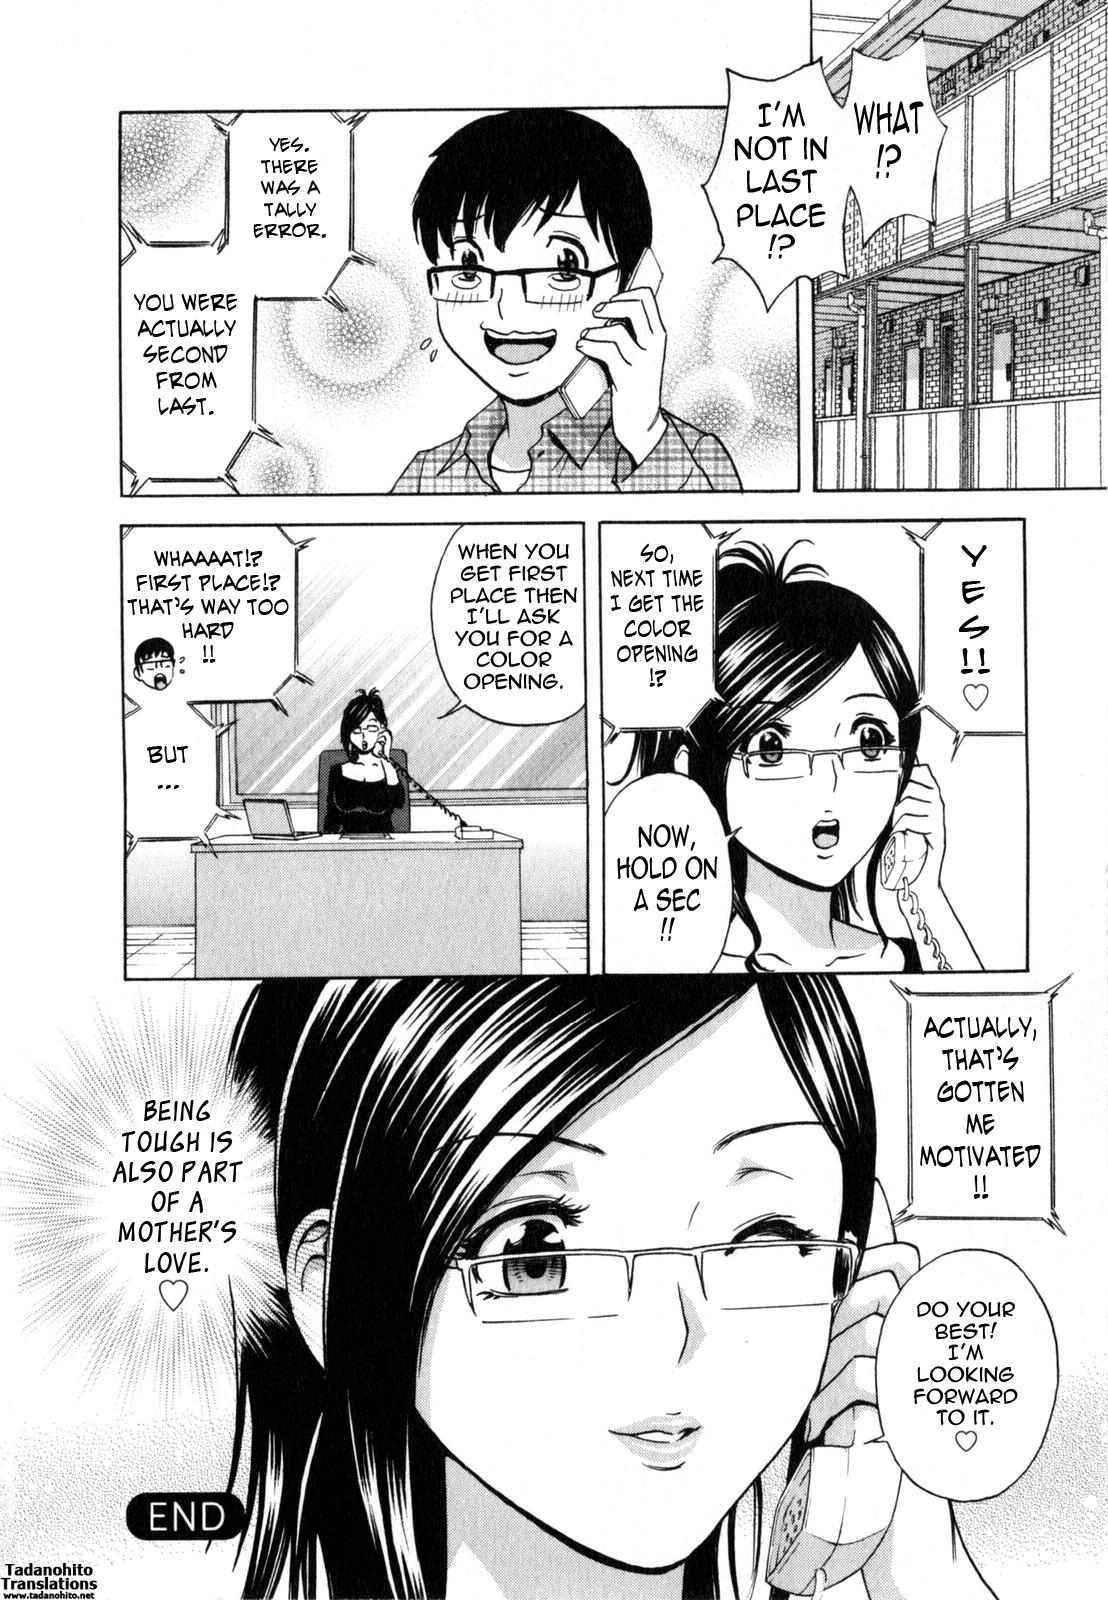 [Hidemaru] Life with Married Women Just Like a Manga 2 - Ch. 1-7 [English] {Tadanohito} 84